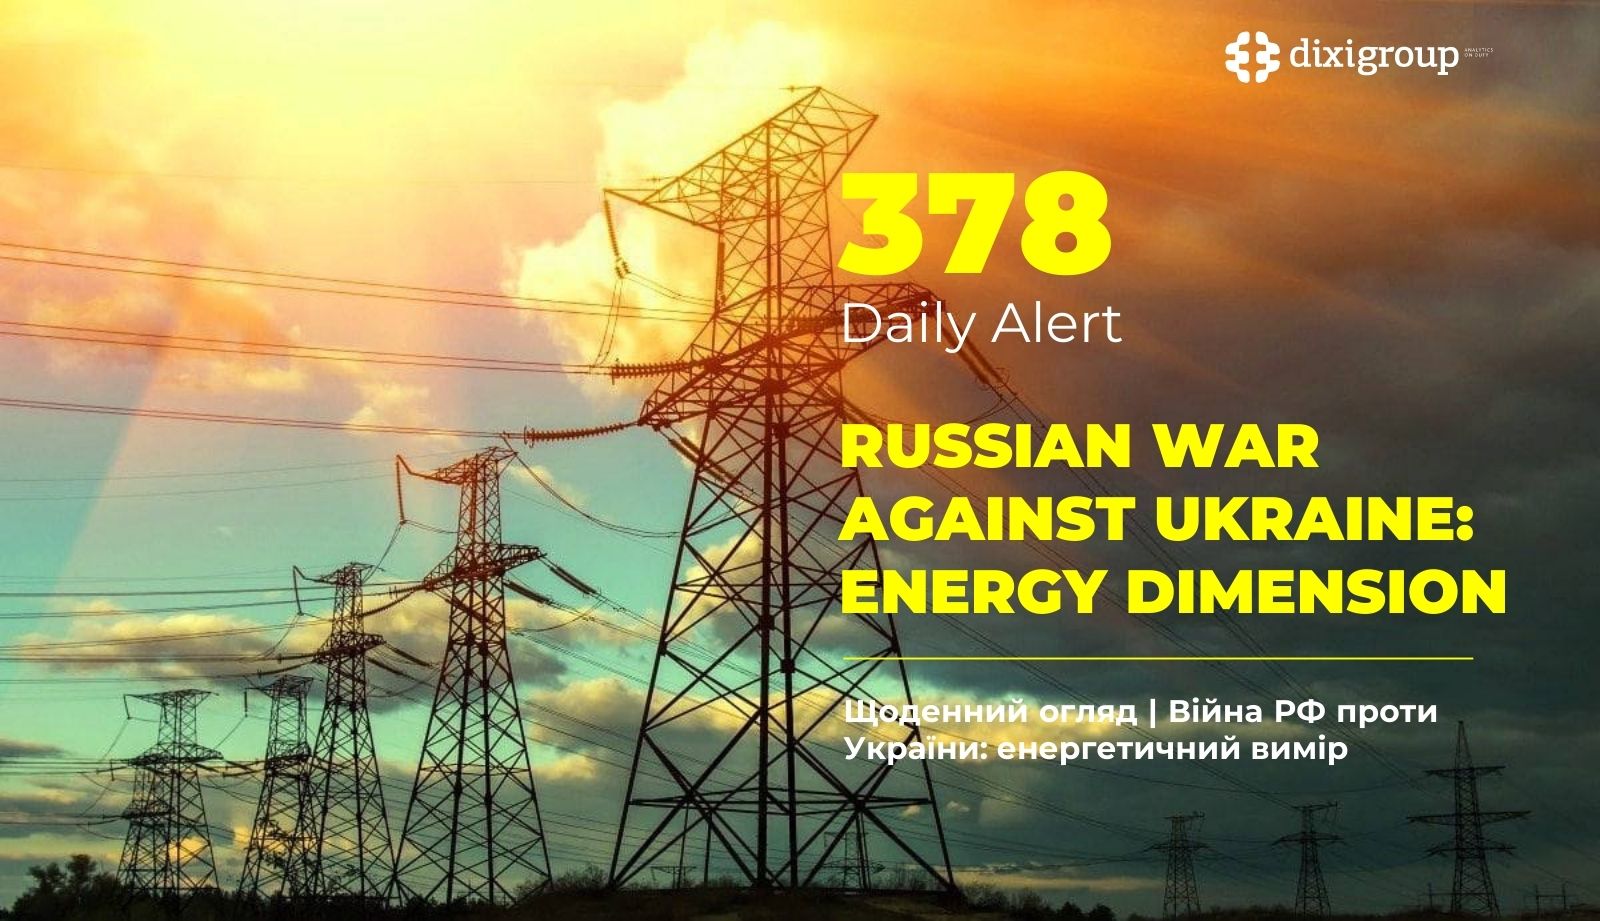 Russian War Against Ukraine: Energy Dimension (DiXi Group alert) – March 8